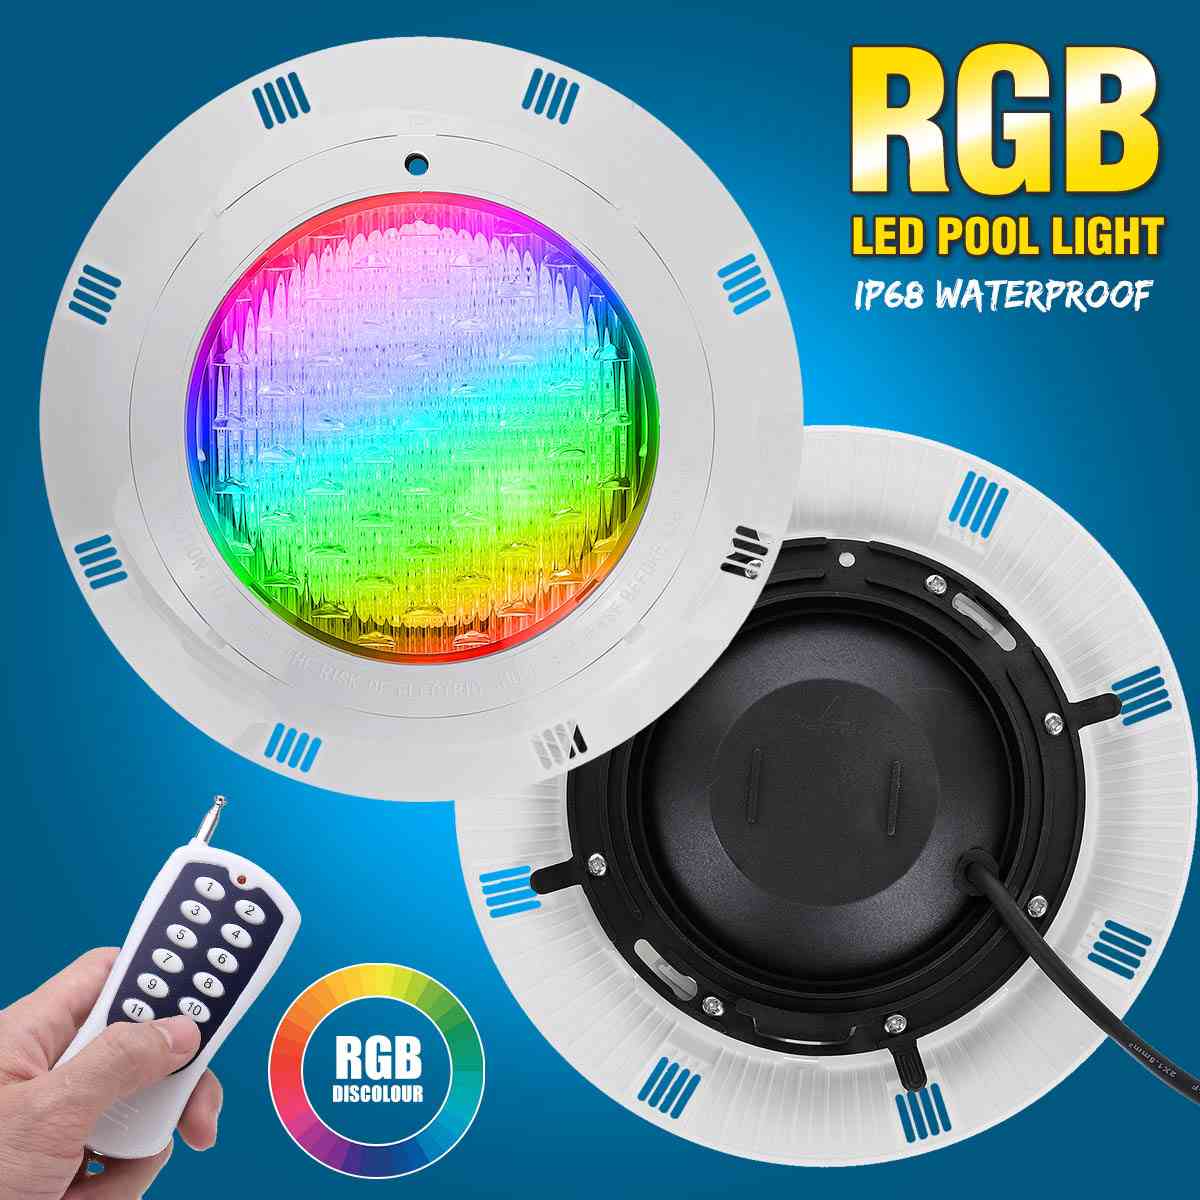 Rgb Led Swimming Pool Light -ip68 Waterproof With Ac12v-24v